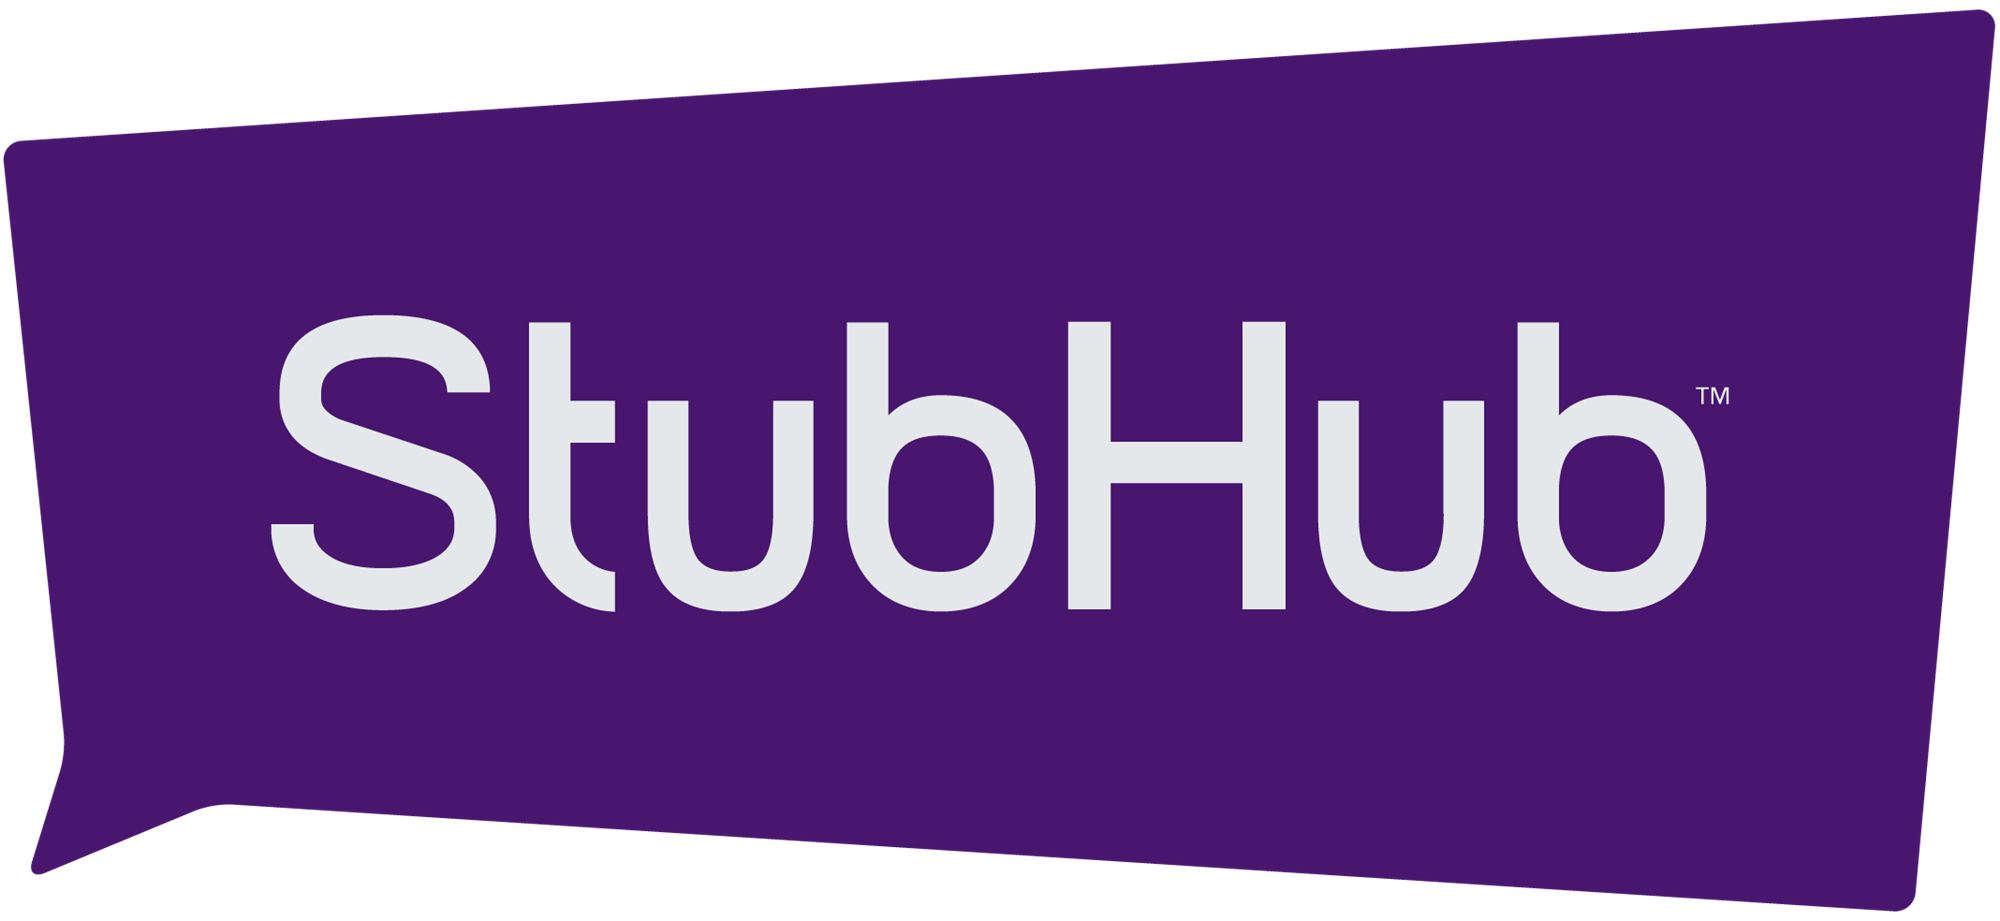 StubHub Logo - StubHub - The Official Fan-to-Fan Ticket Marketplace of the ...